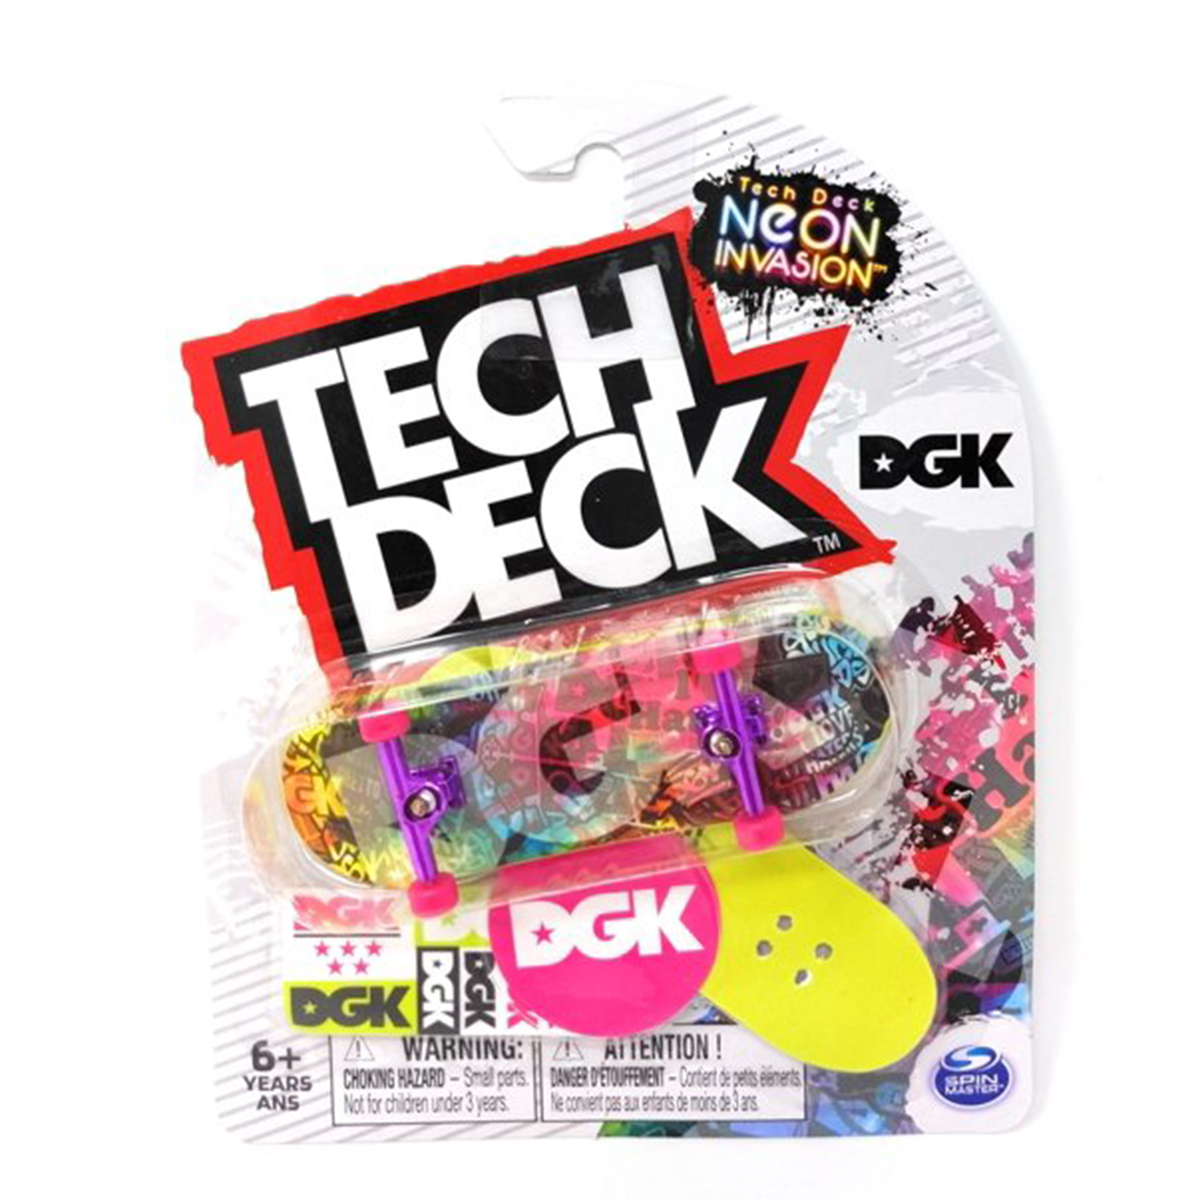 Mini placa skateboard Tech Deck, Neon Invasion, DGK 20126368